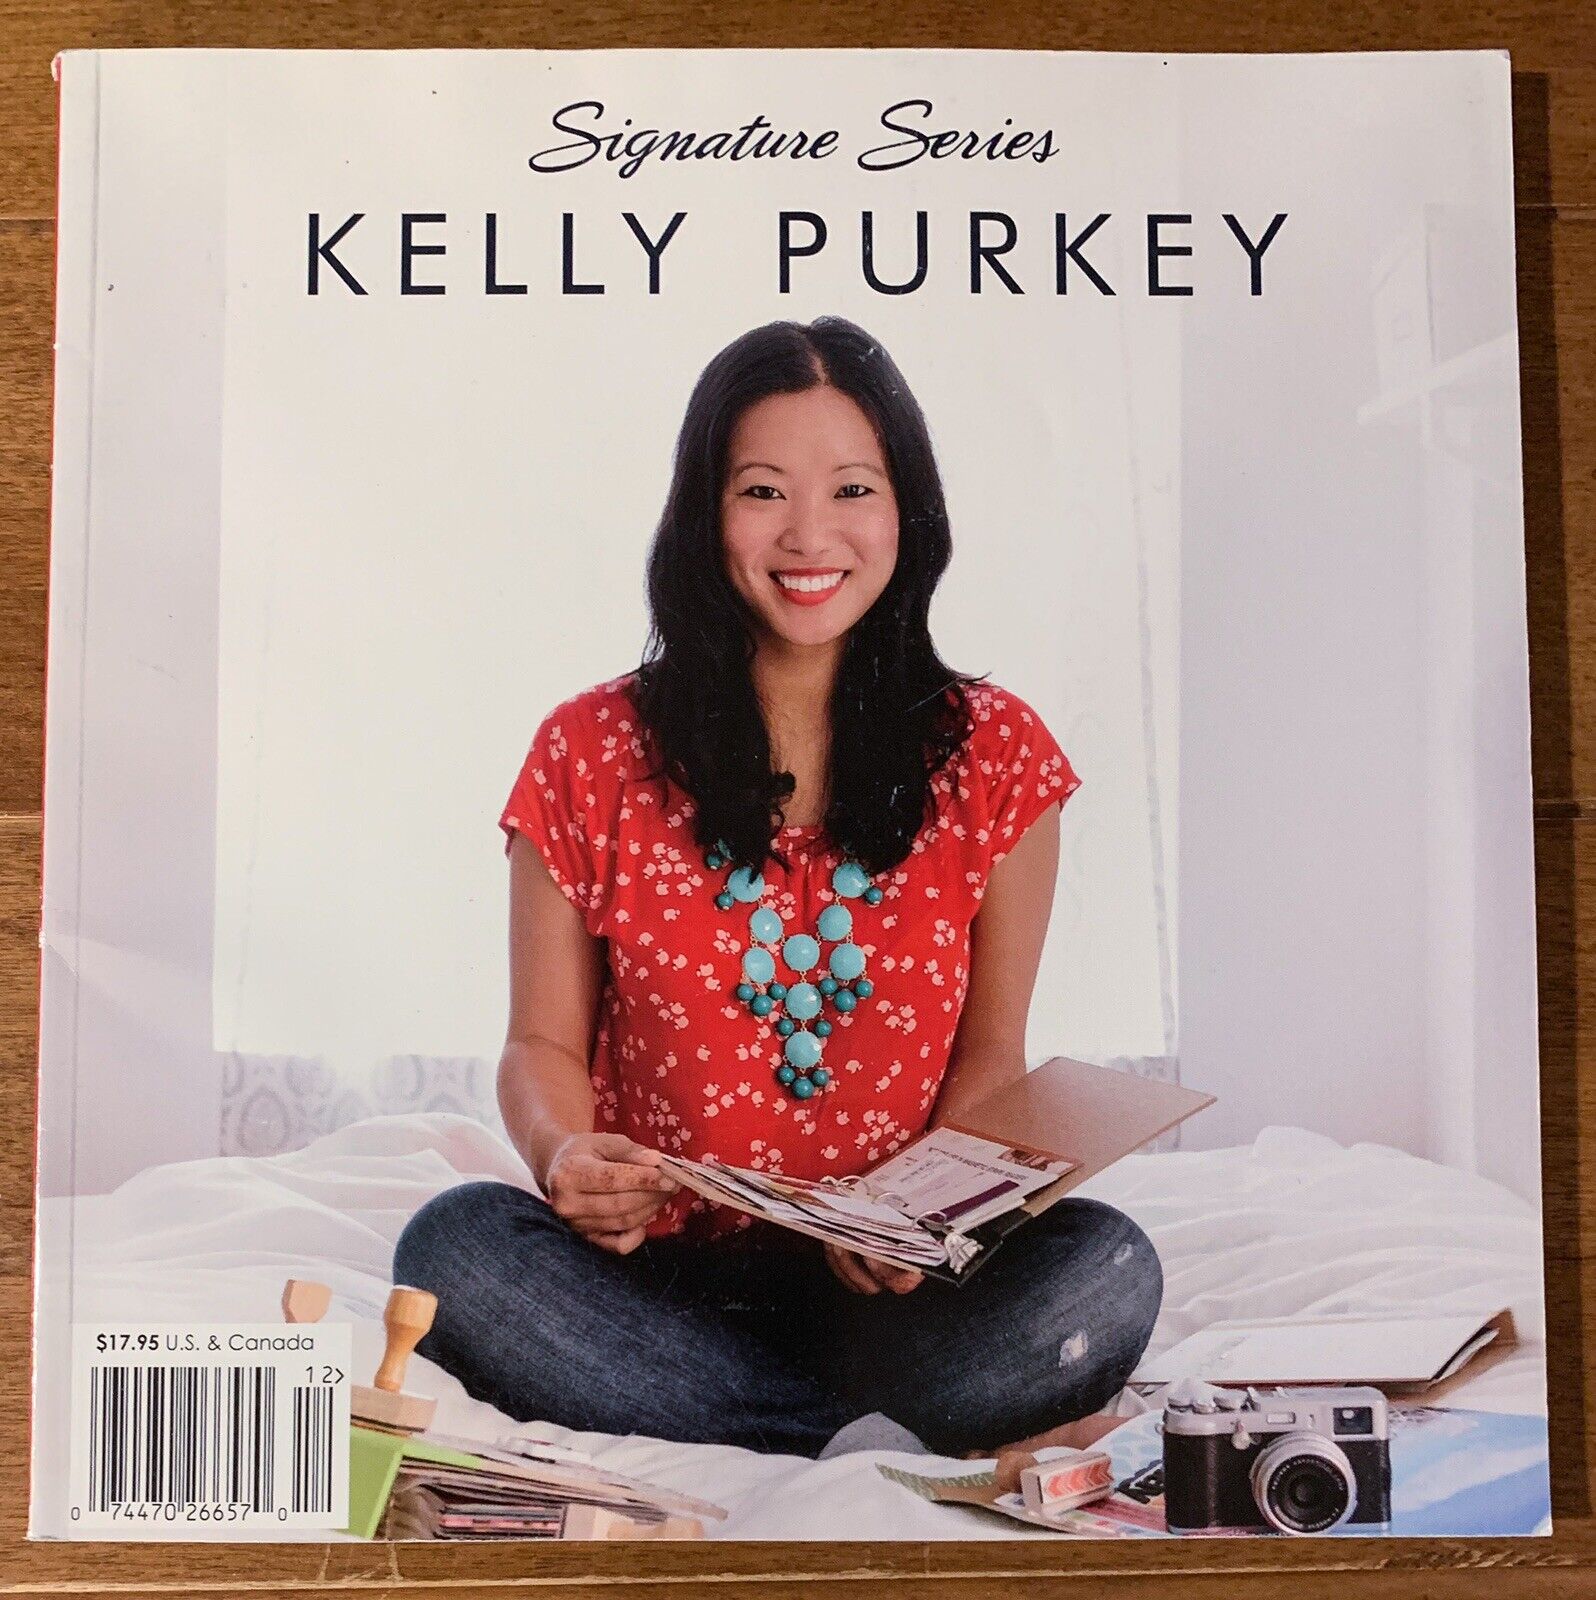 Scrapbook Trends 2012 Signature Series Kelly Purkey Scrapbooking Cardmaking Book